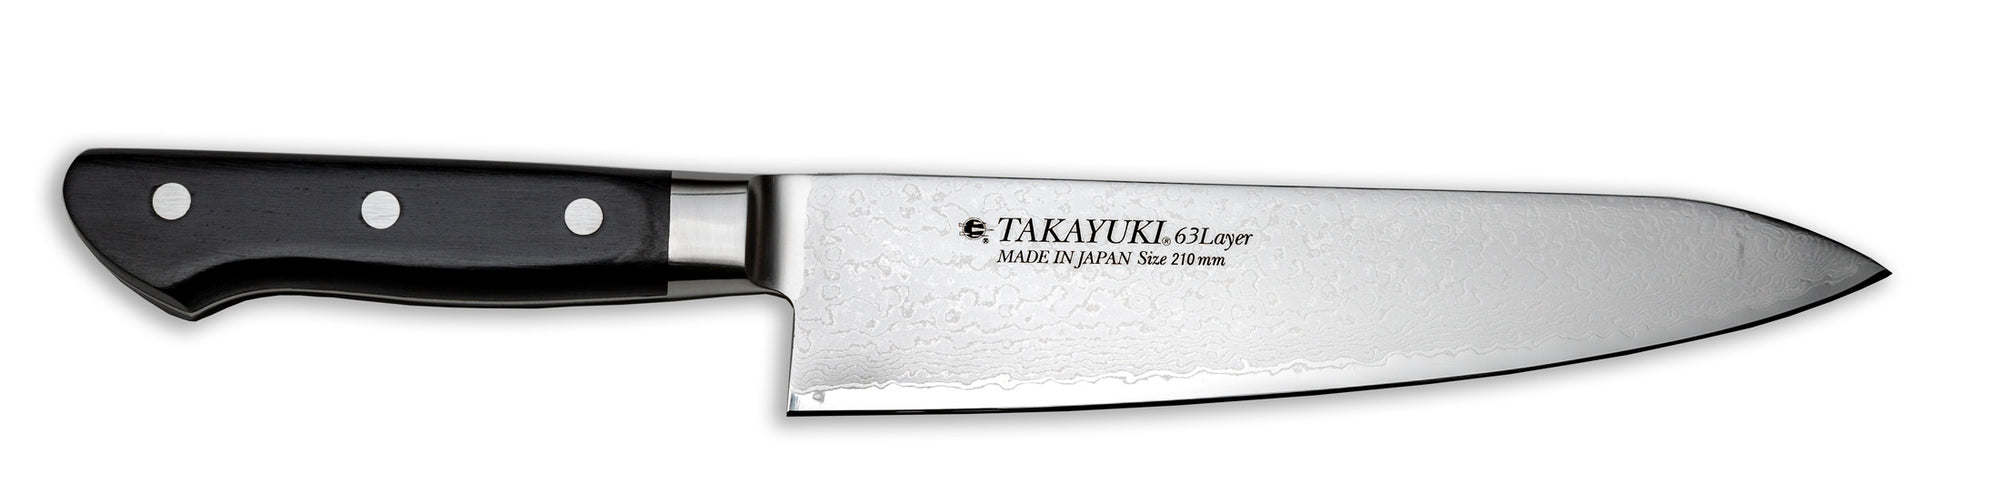 Sakai Takayuki 63-layer 210mm chef knife gyutou Canada